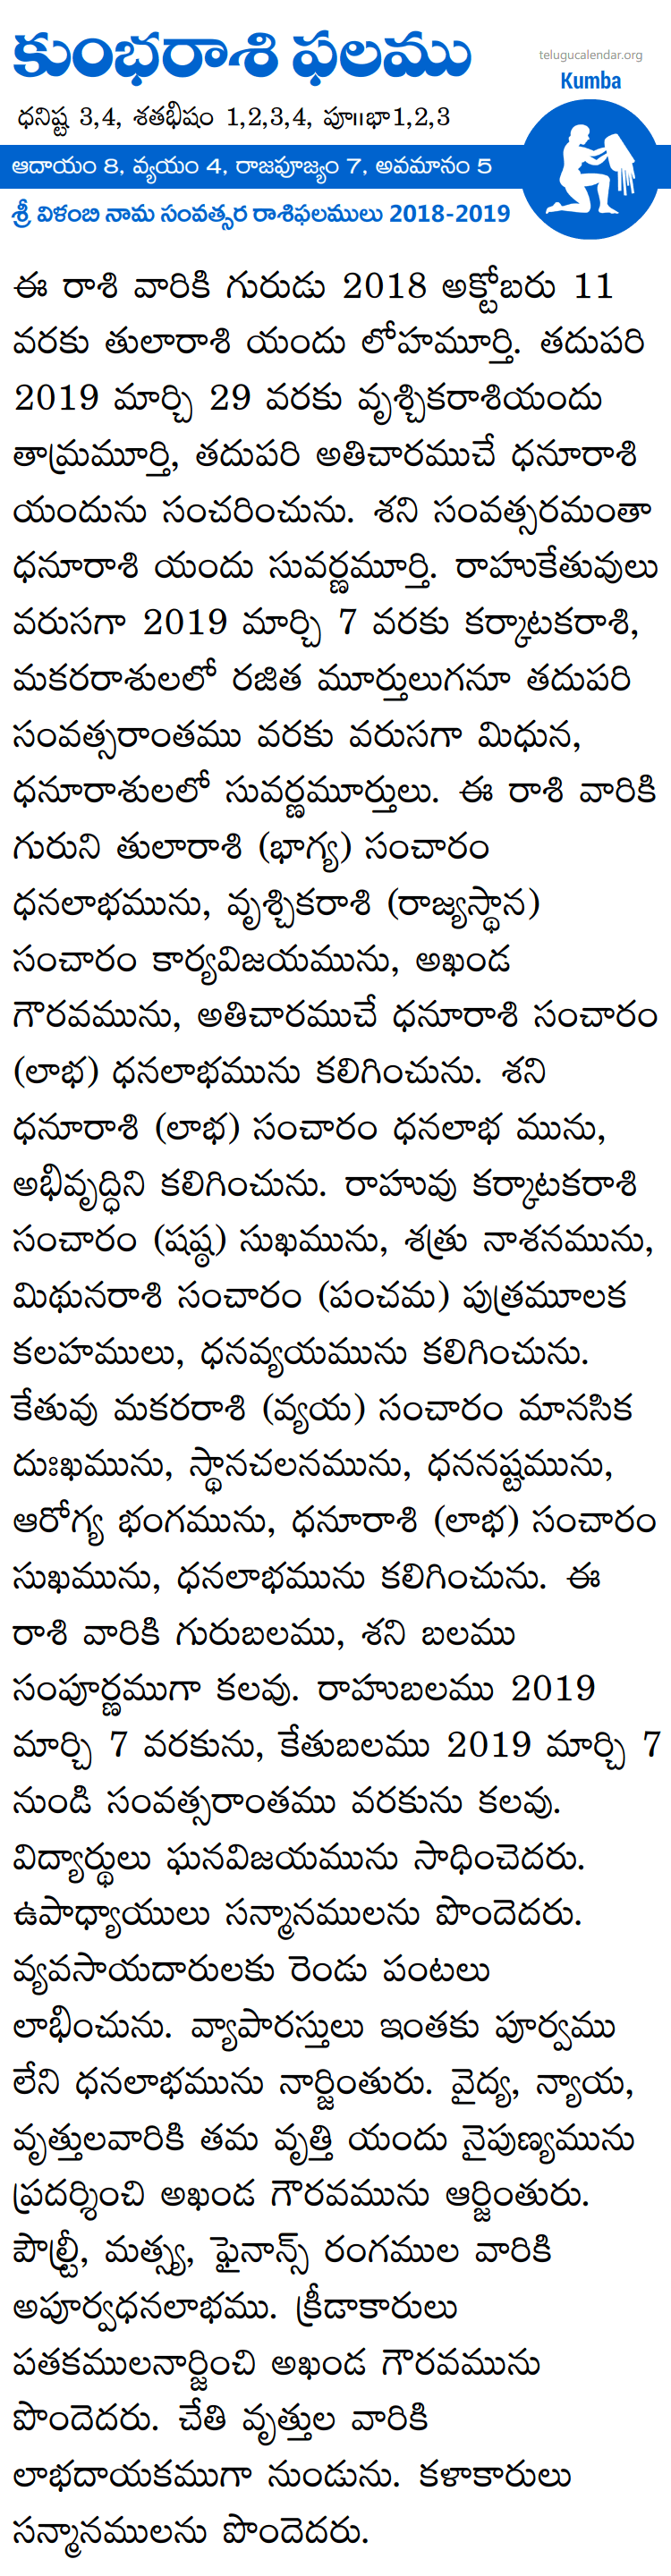 Kumba Rasi Phalalu 2019-2020 Telugu